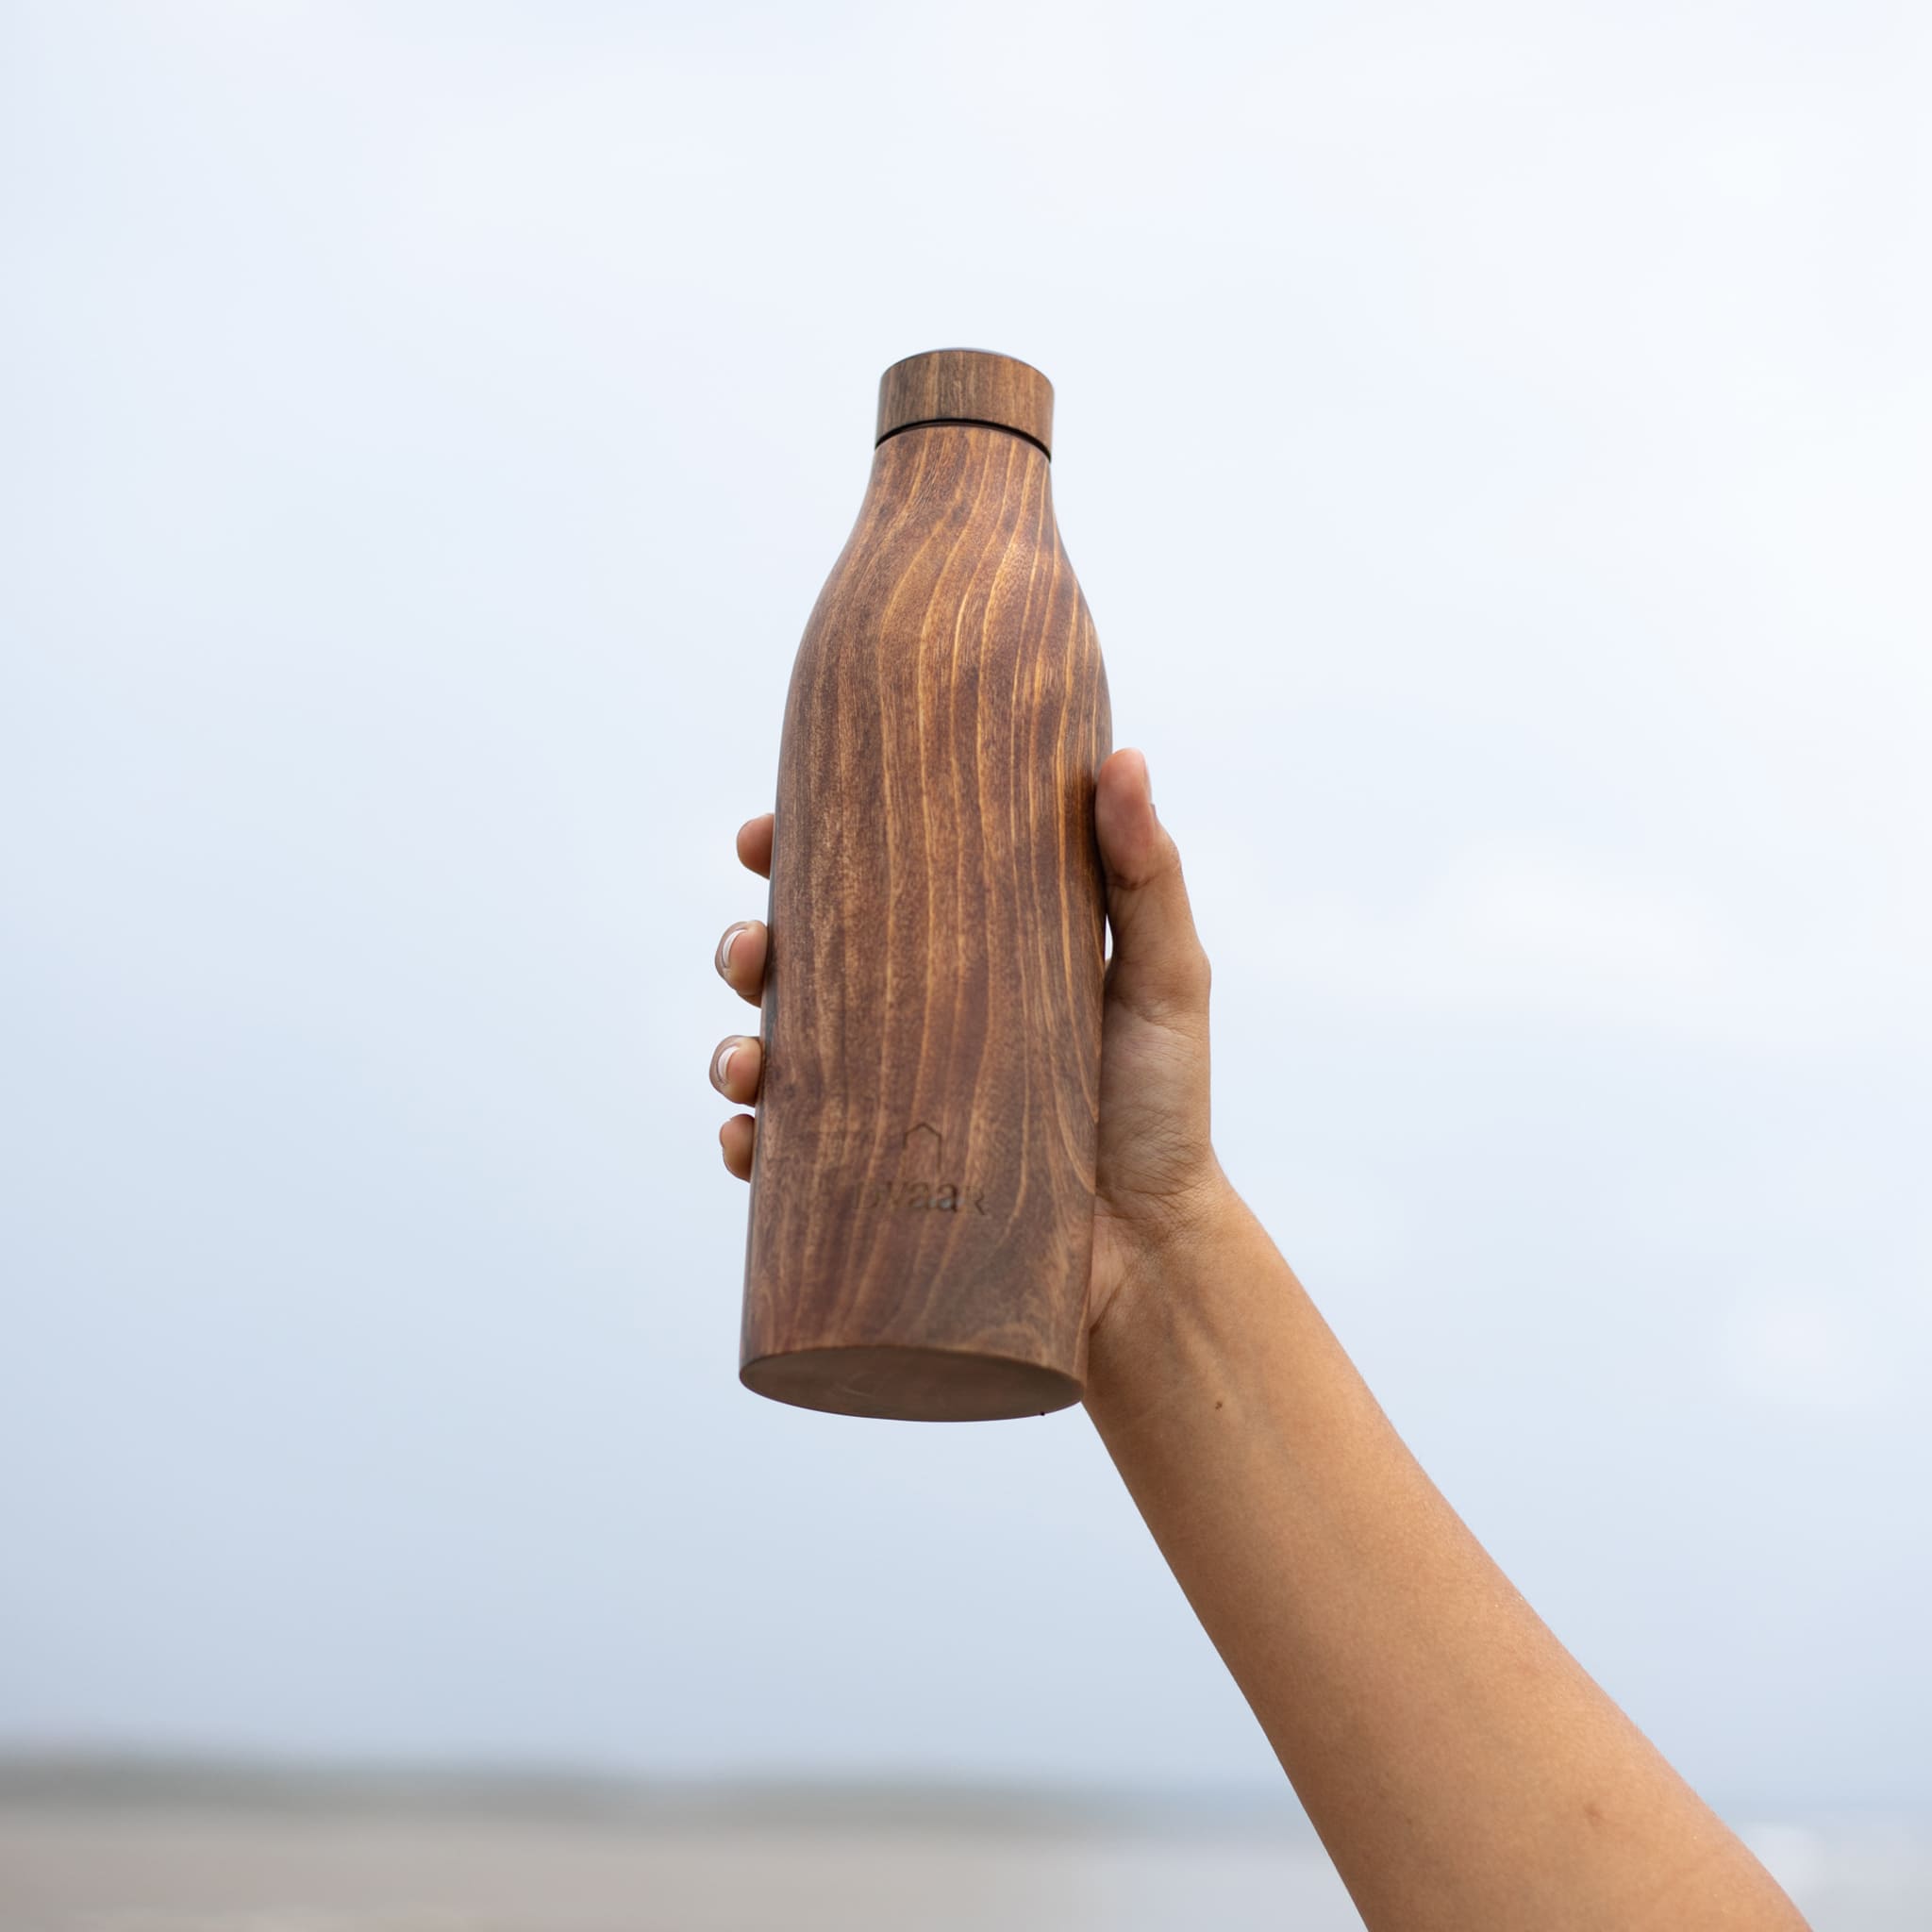 The wooden copper bottle blackberrywood